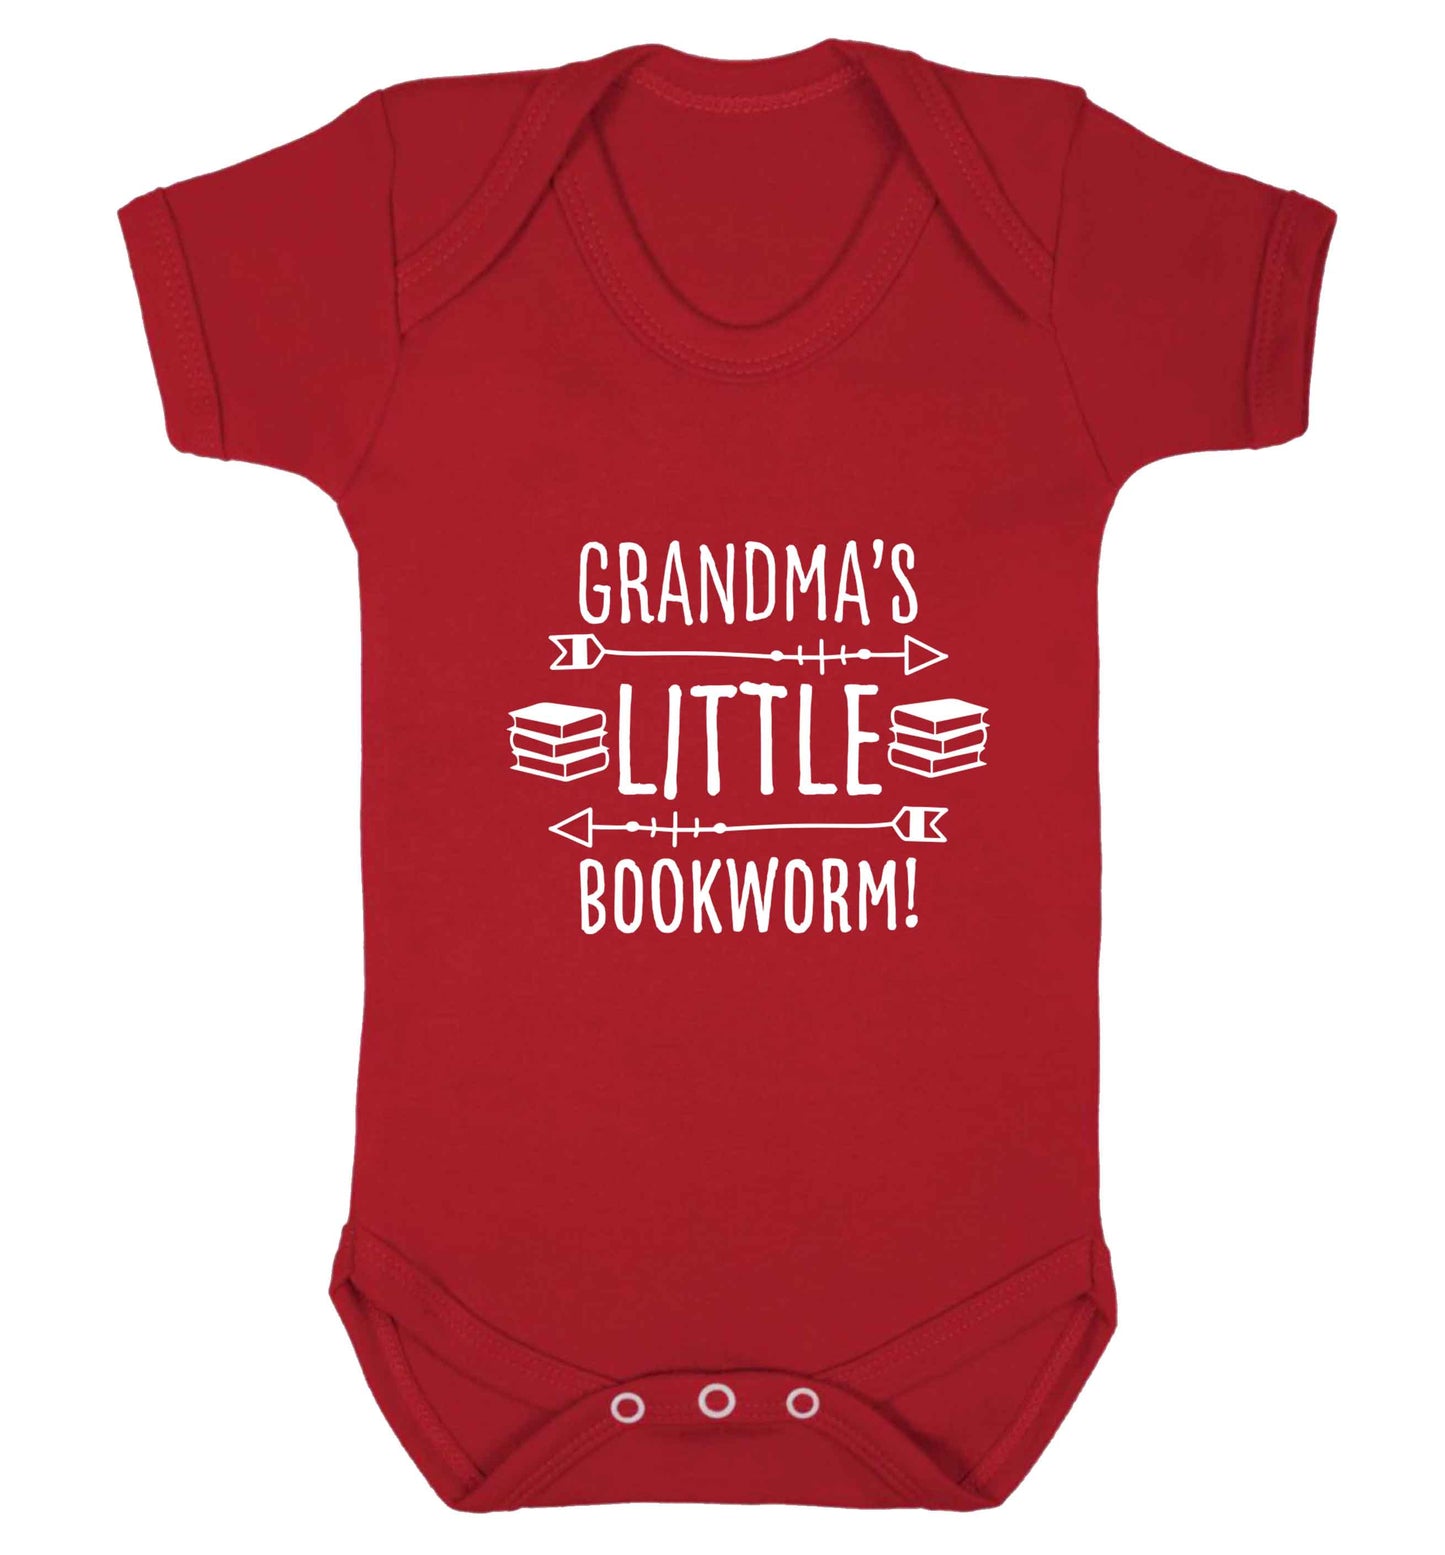 Grandma's little bookworm baby vest red 18-24 months